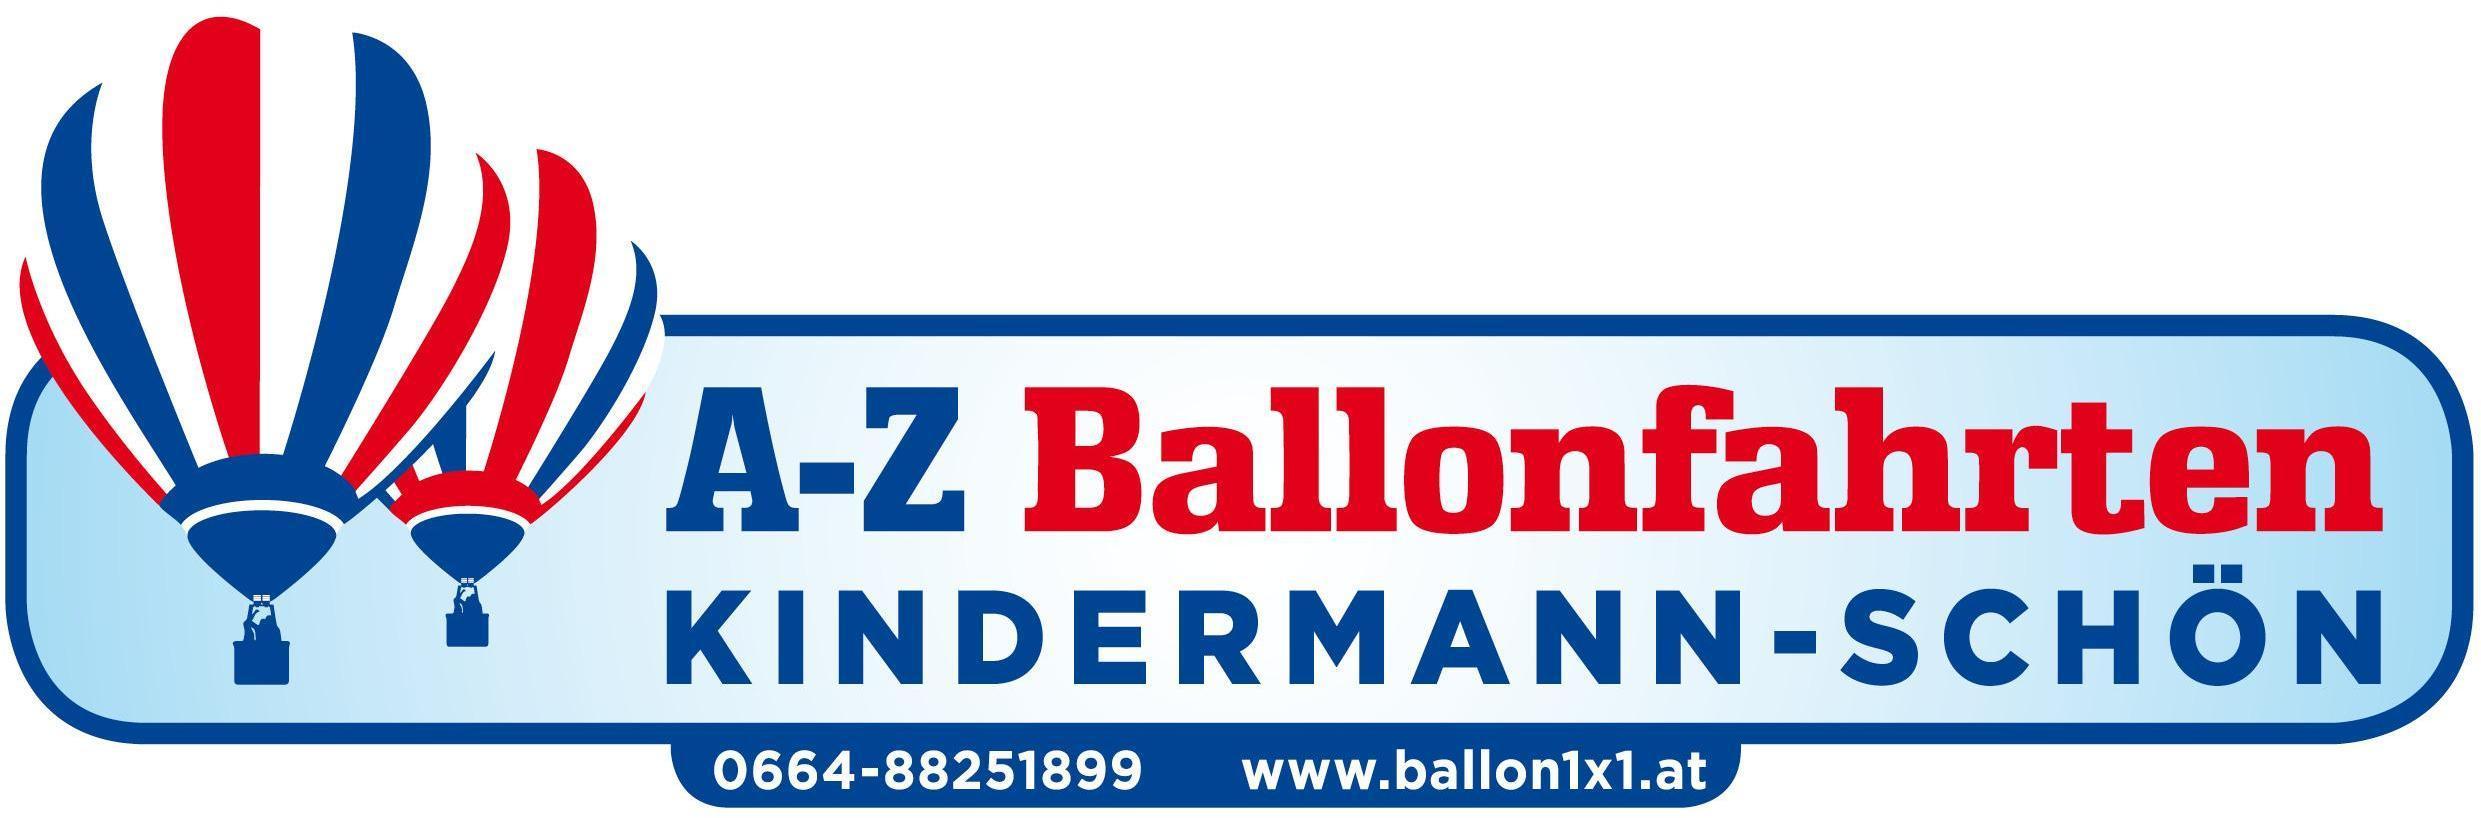 Logo A-Z Ballonfahrten Kindermann-Schön KG